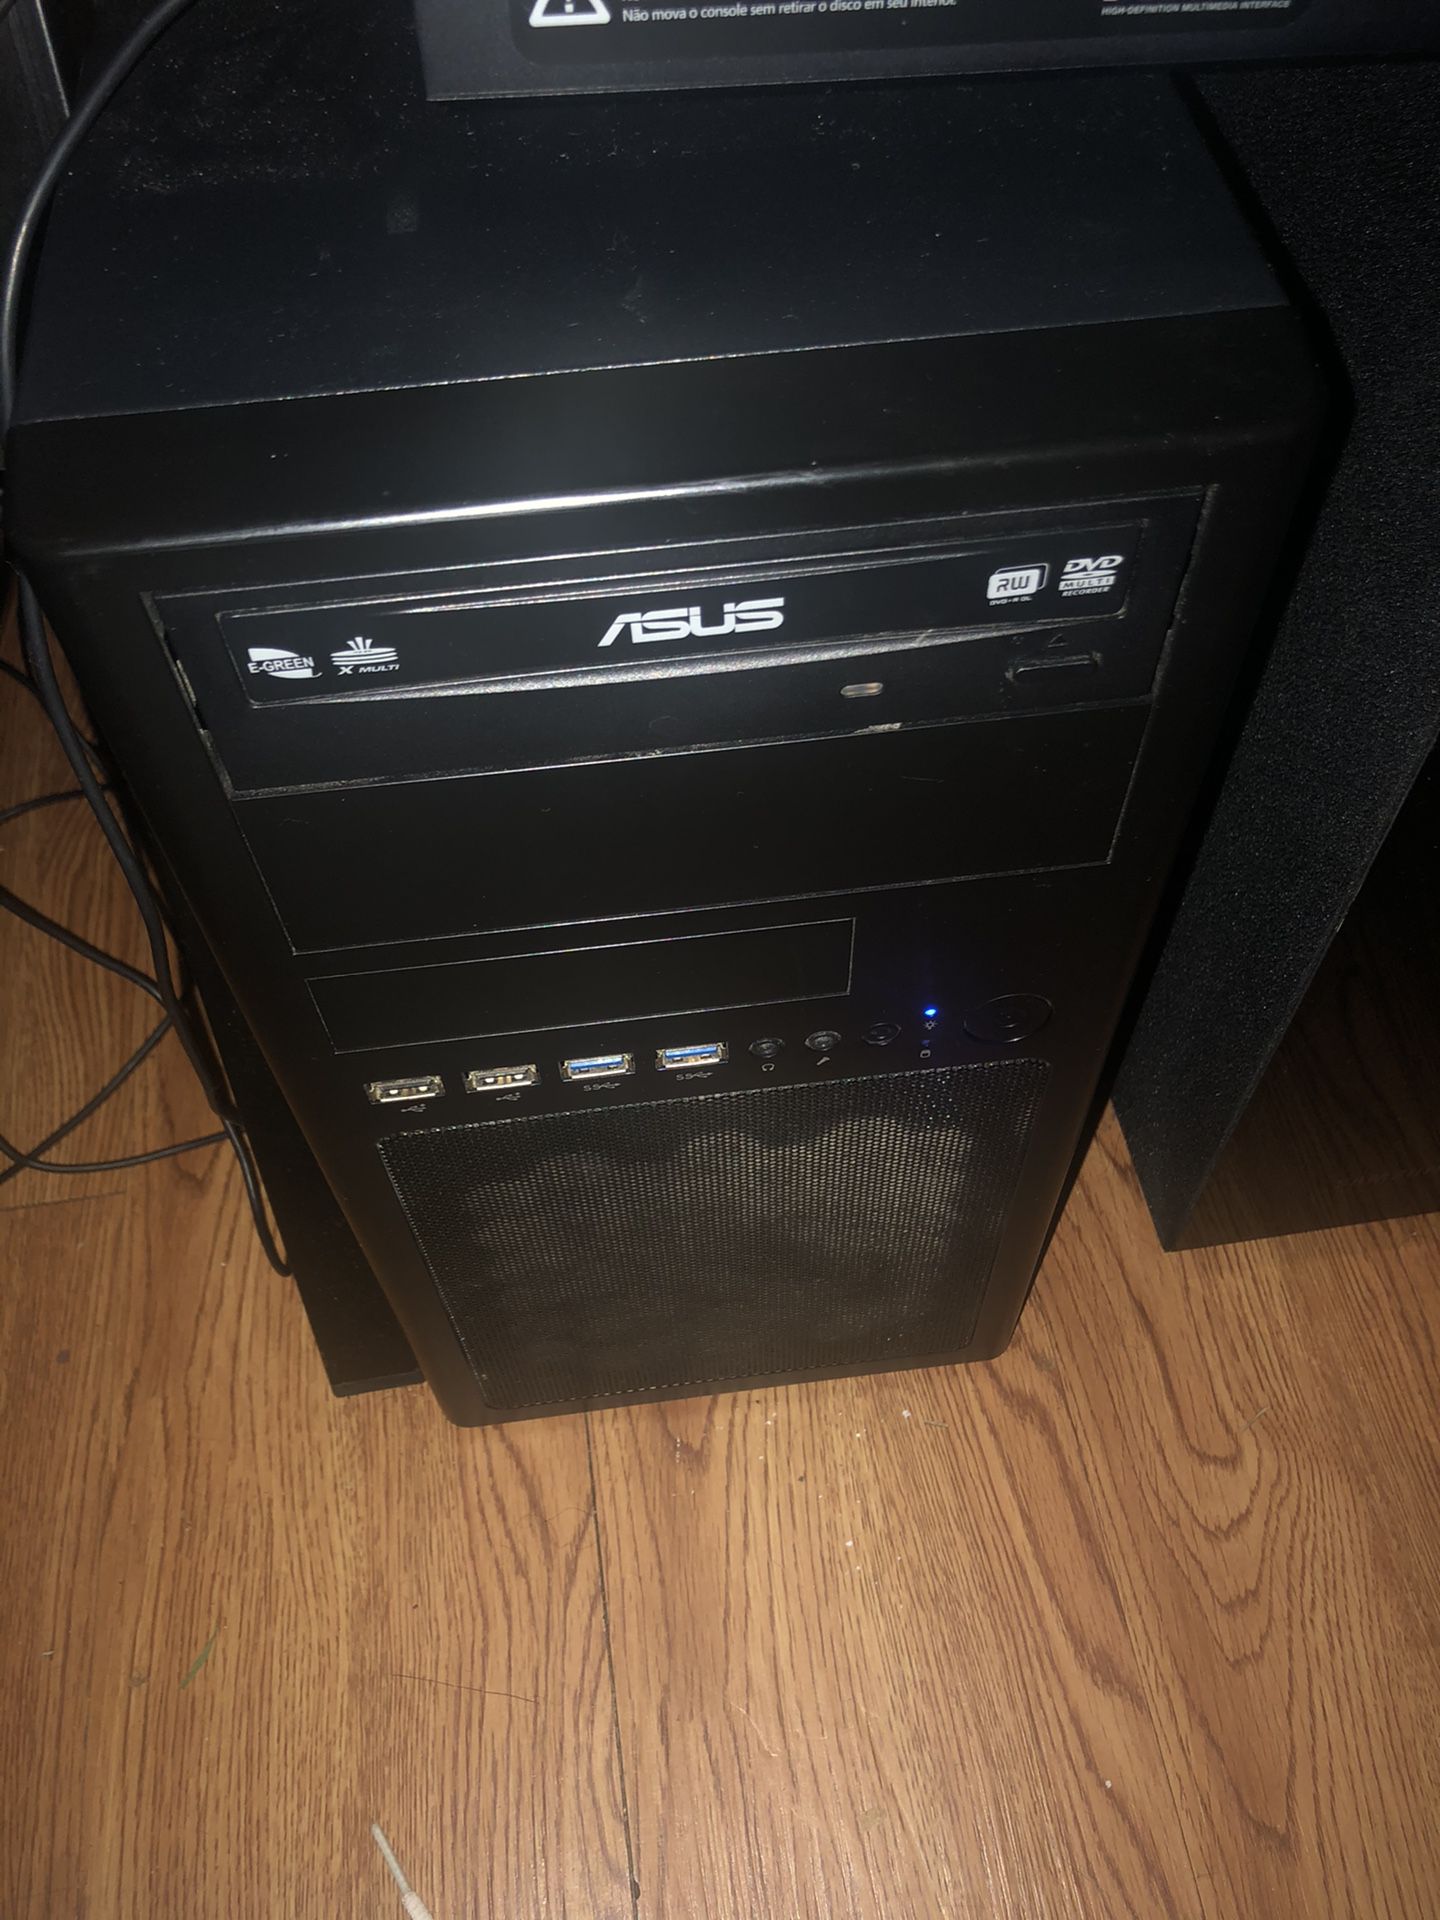 Asus Desktop Computer(price negotiable)